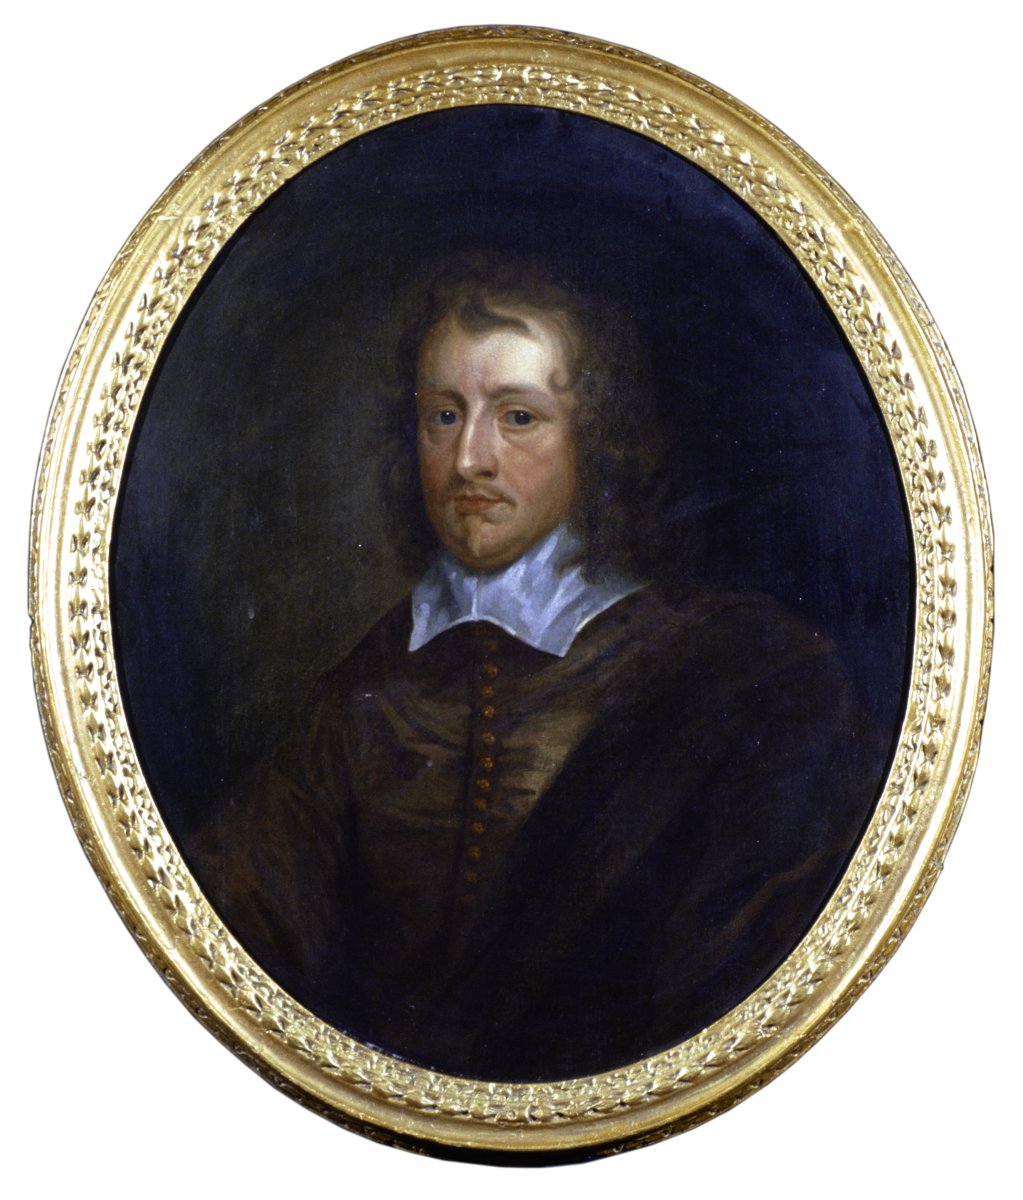 Image of Sir Richard Fanshawe, 1st Baronet (1608-1666) diplomat and author